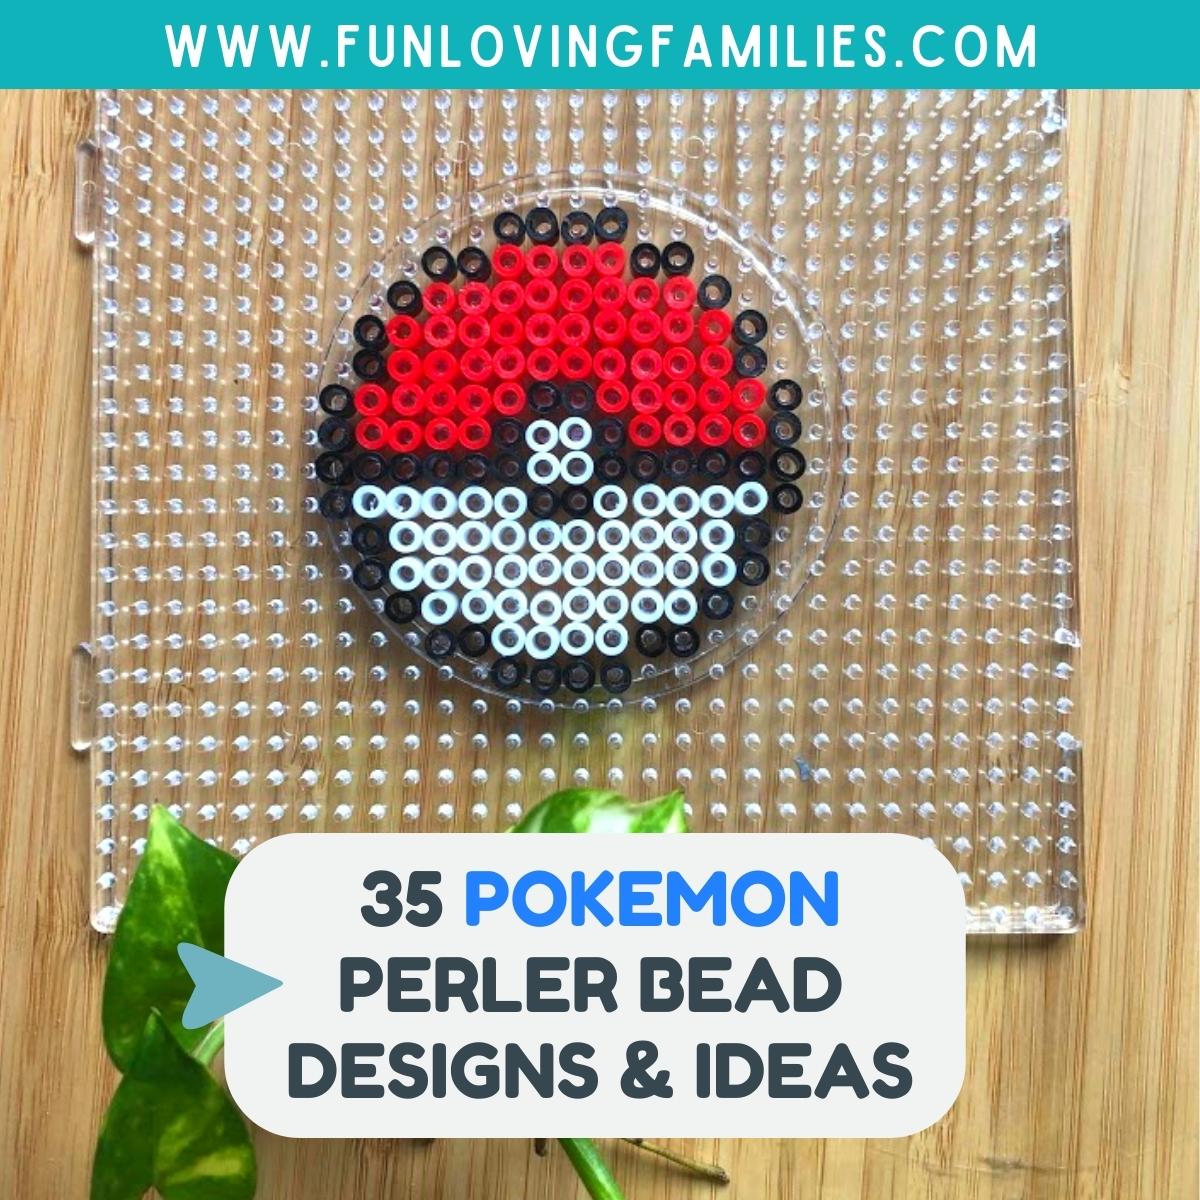 Pokémon Perler Bead Patterns Designs and Ideas